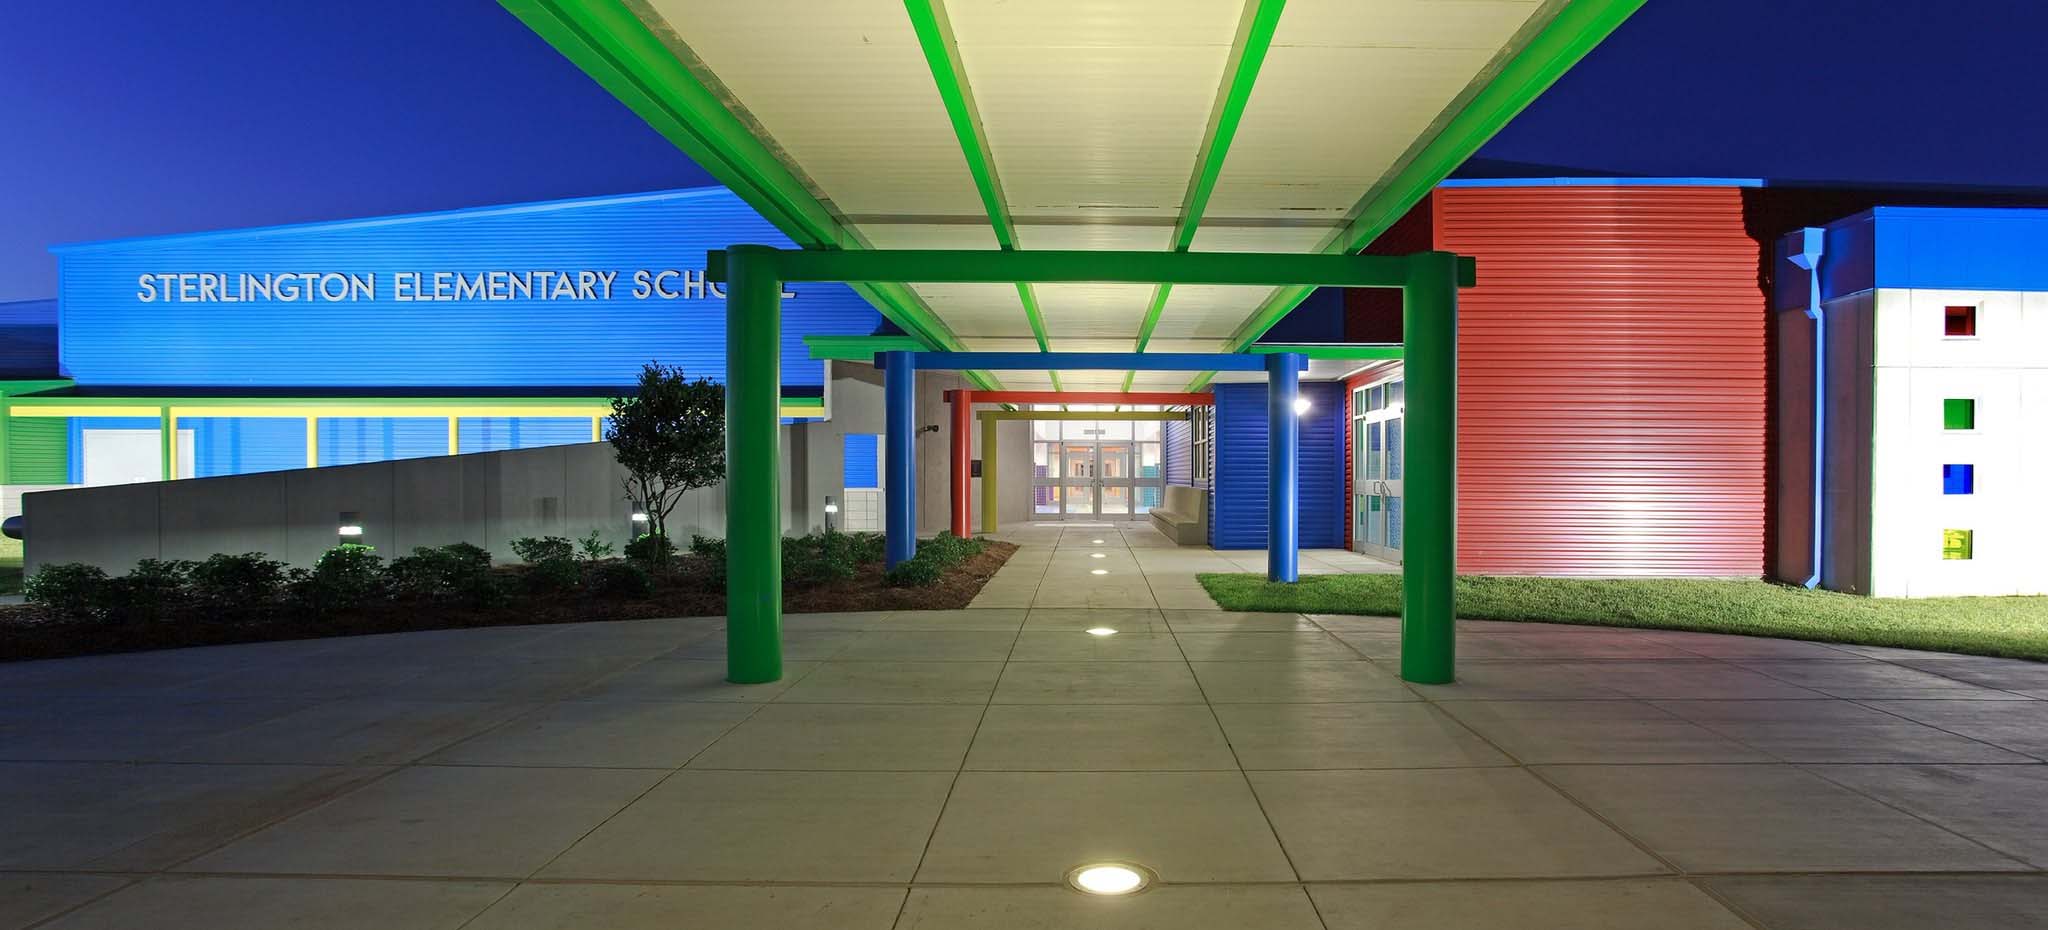 Sterlington Elementary School building and entryway